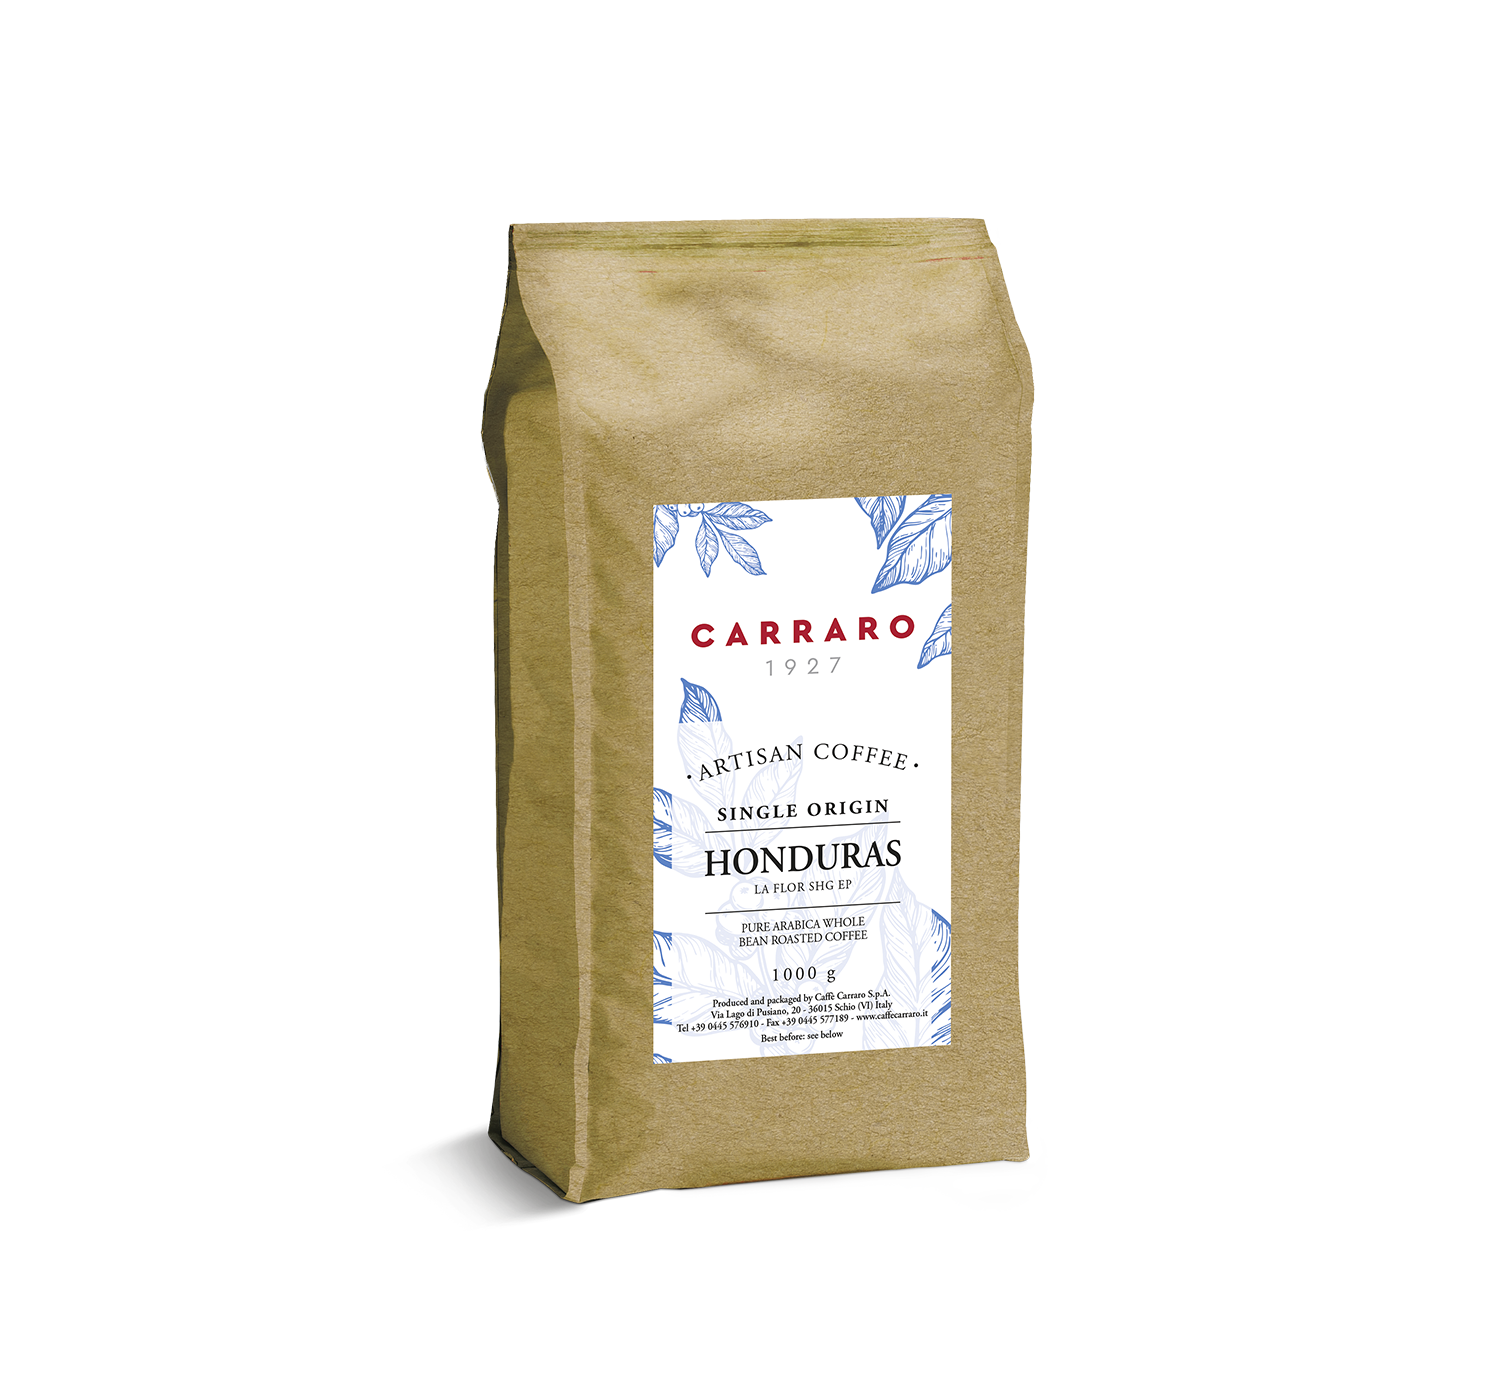 Artisan Coffee - Honduras – coffee beans 1000 g - Shop online Caffè Carraro